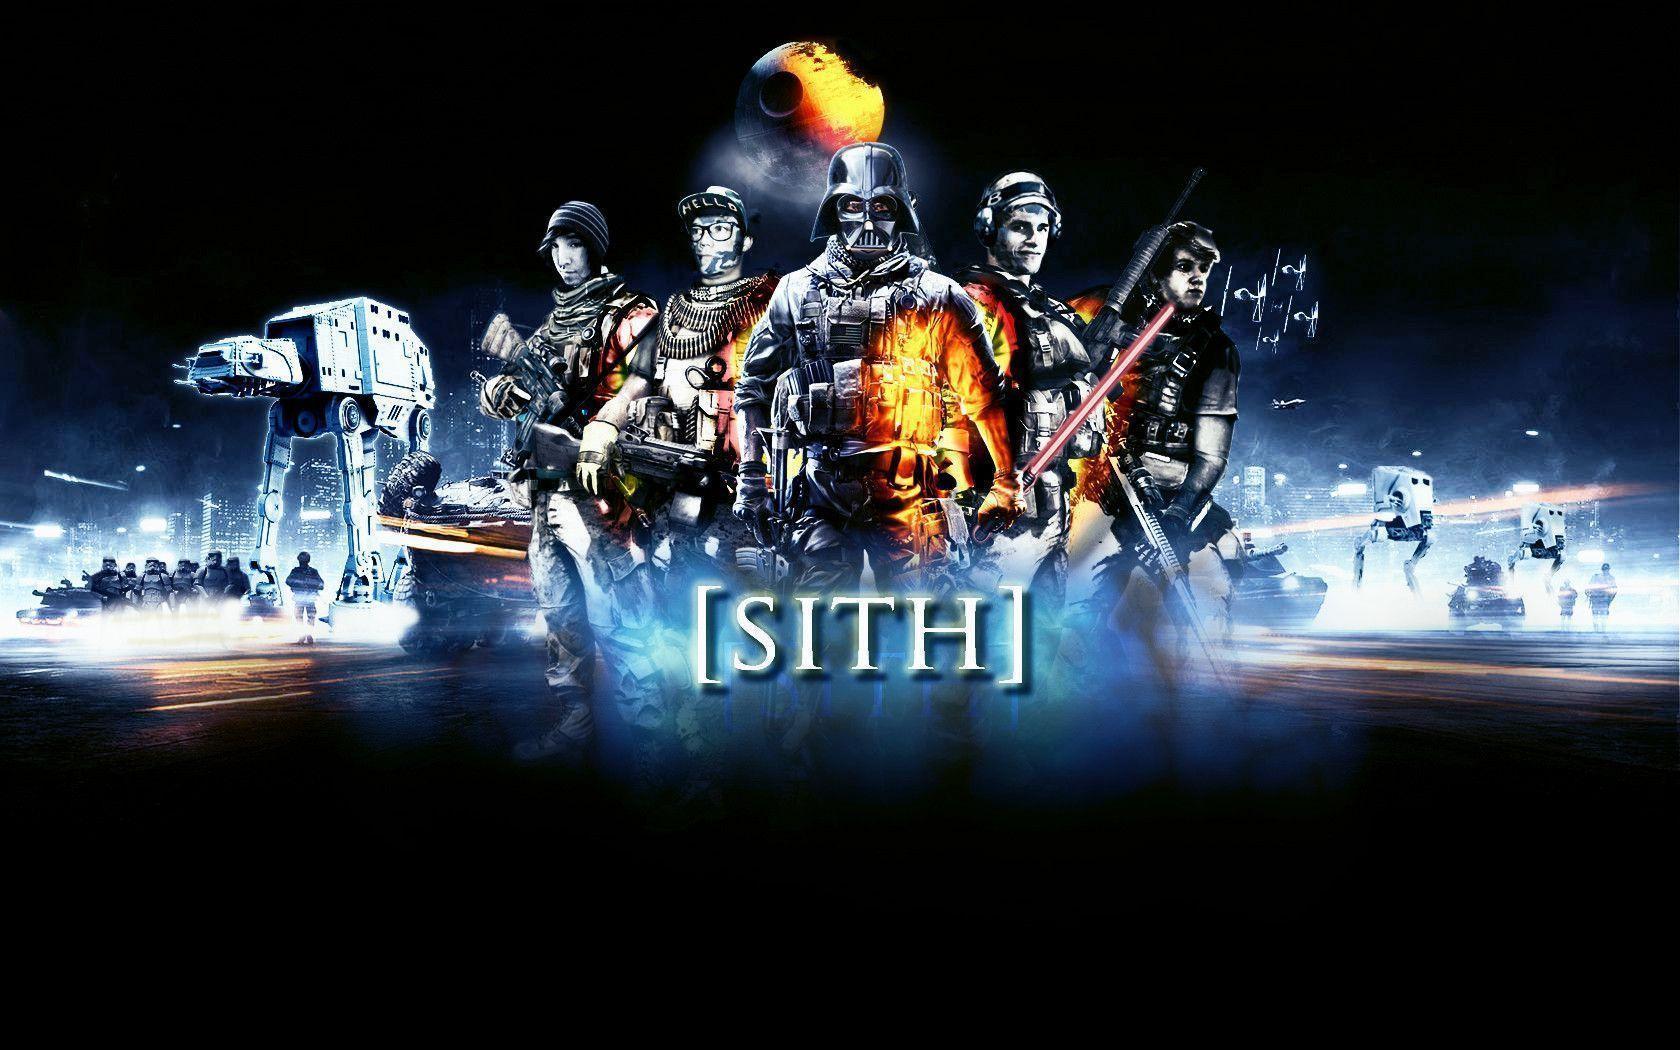 Sith Wallpaper updated kinda